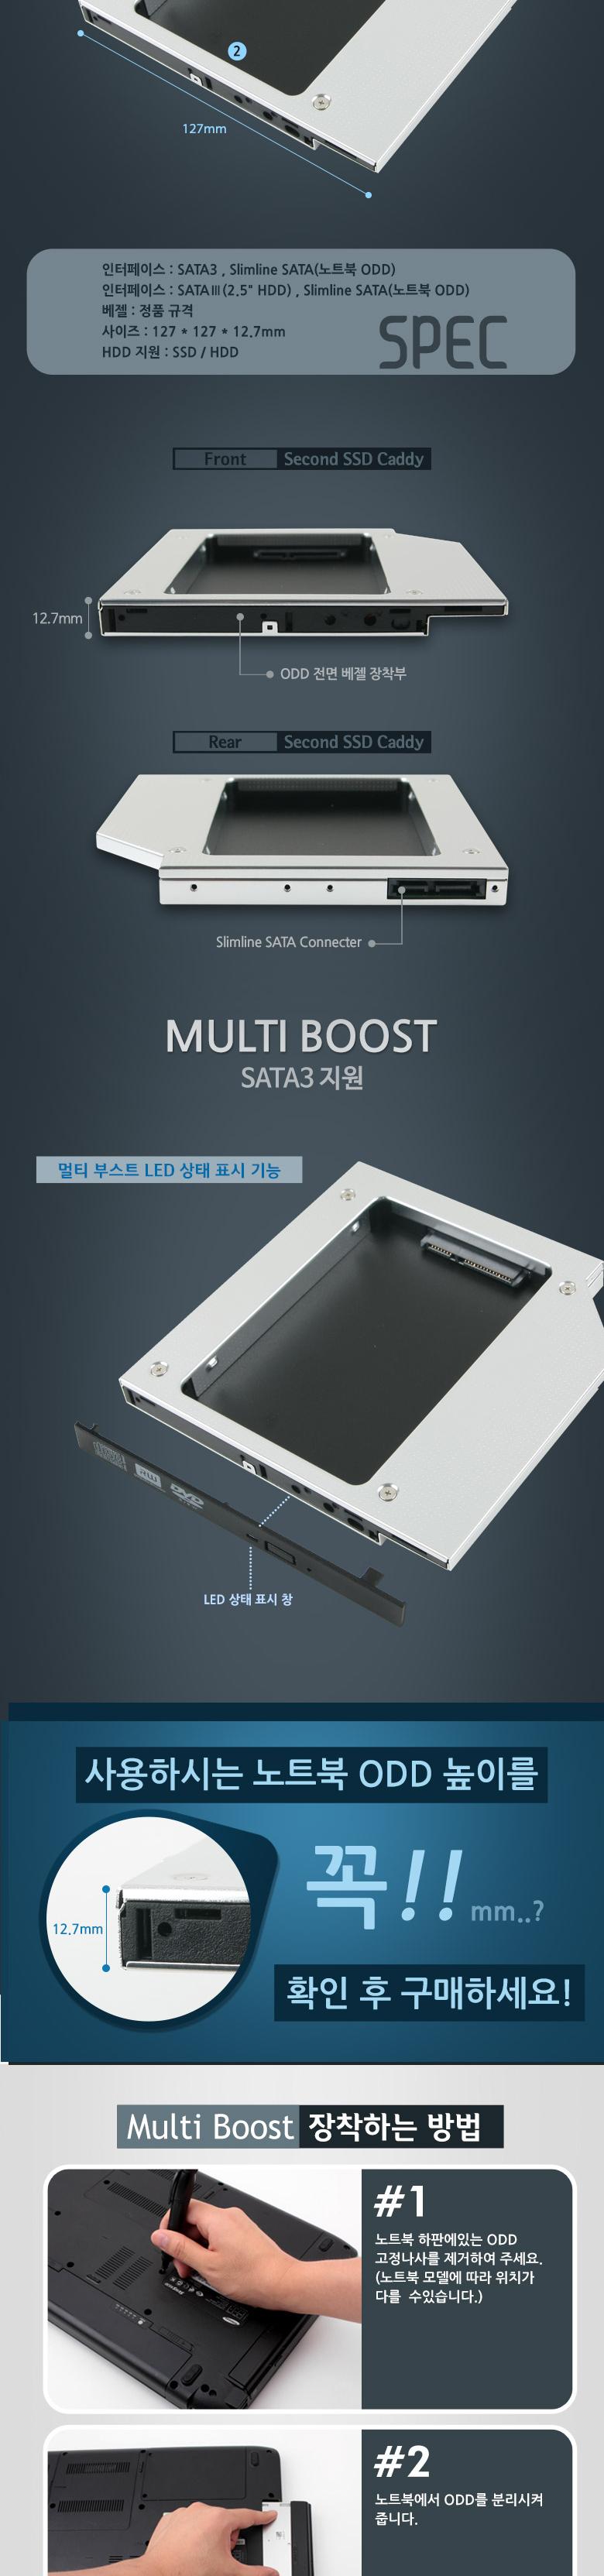 Coms ƮϿ ƼνƮ 12.7mm 2.5 HDD SATA 22P to Slimline SATA F LED 纰  ġ SATA3  ƮϾǼ ƮϺνƮ νƮ Ʈֺ SATAνƮ SATAġνƮ ƮϿνƮ ƮϸƼνƮ